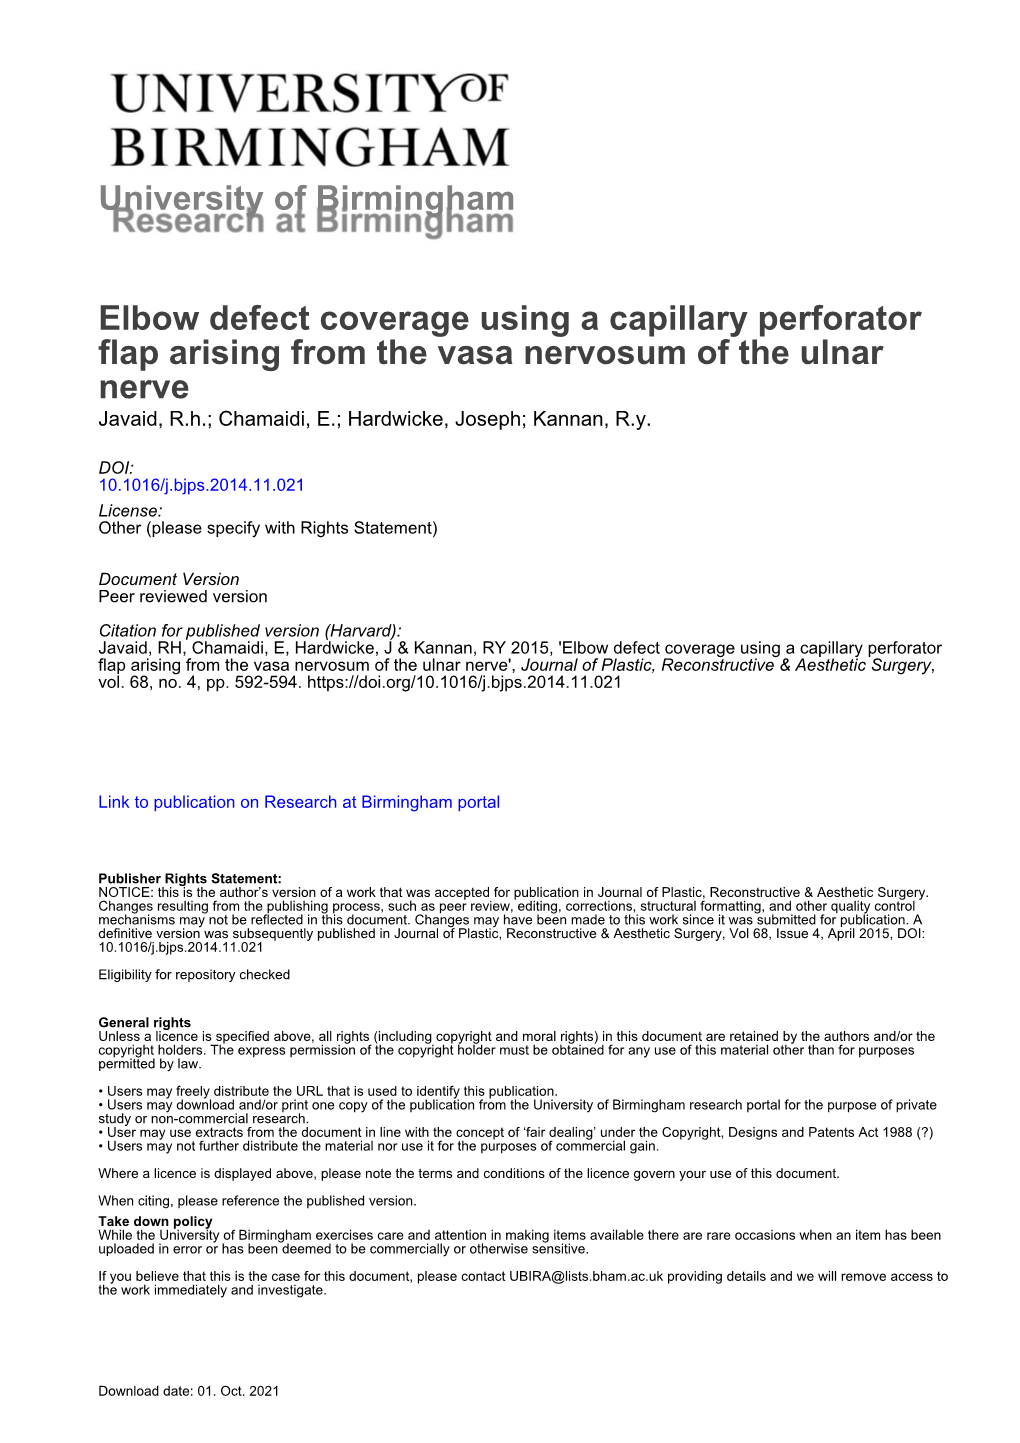 Elbow Defect Coverage Using a Capillary Perforator Flap Arising from the Vasa Nervosum of the Ulnar Nerve Javaid, R.H.; Chamaidi, E.; Hardwicke, Joseph; Kannan, R.Y